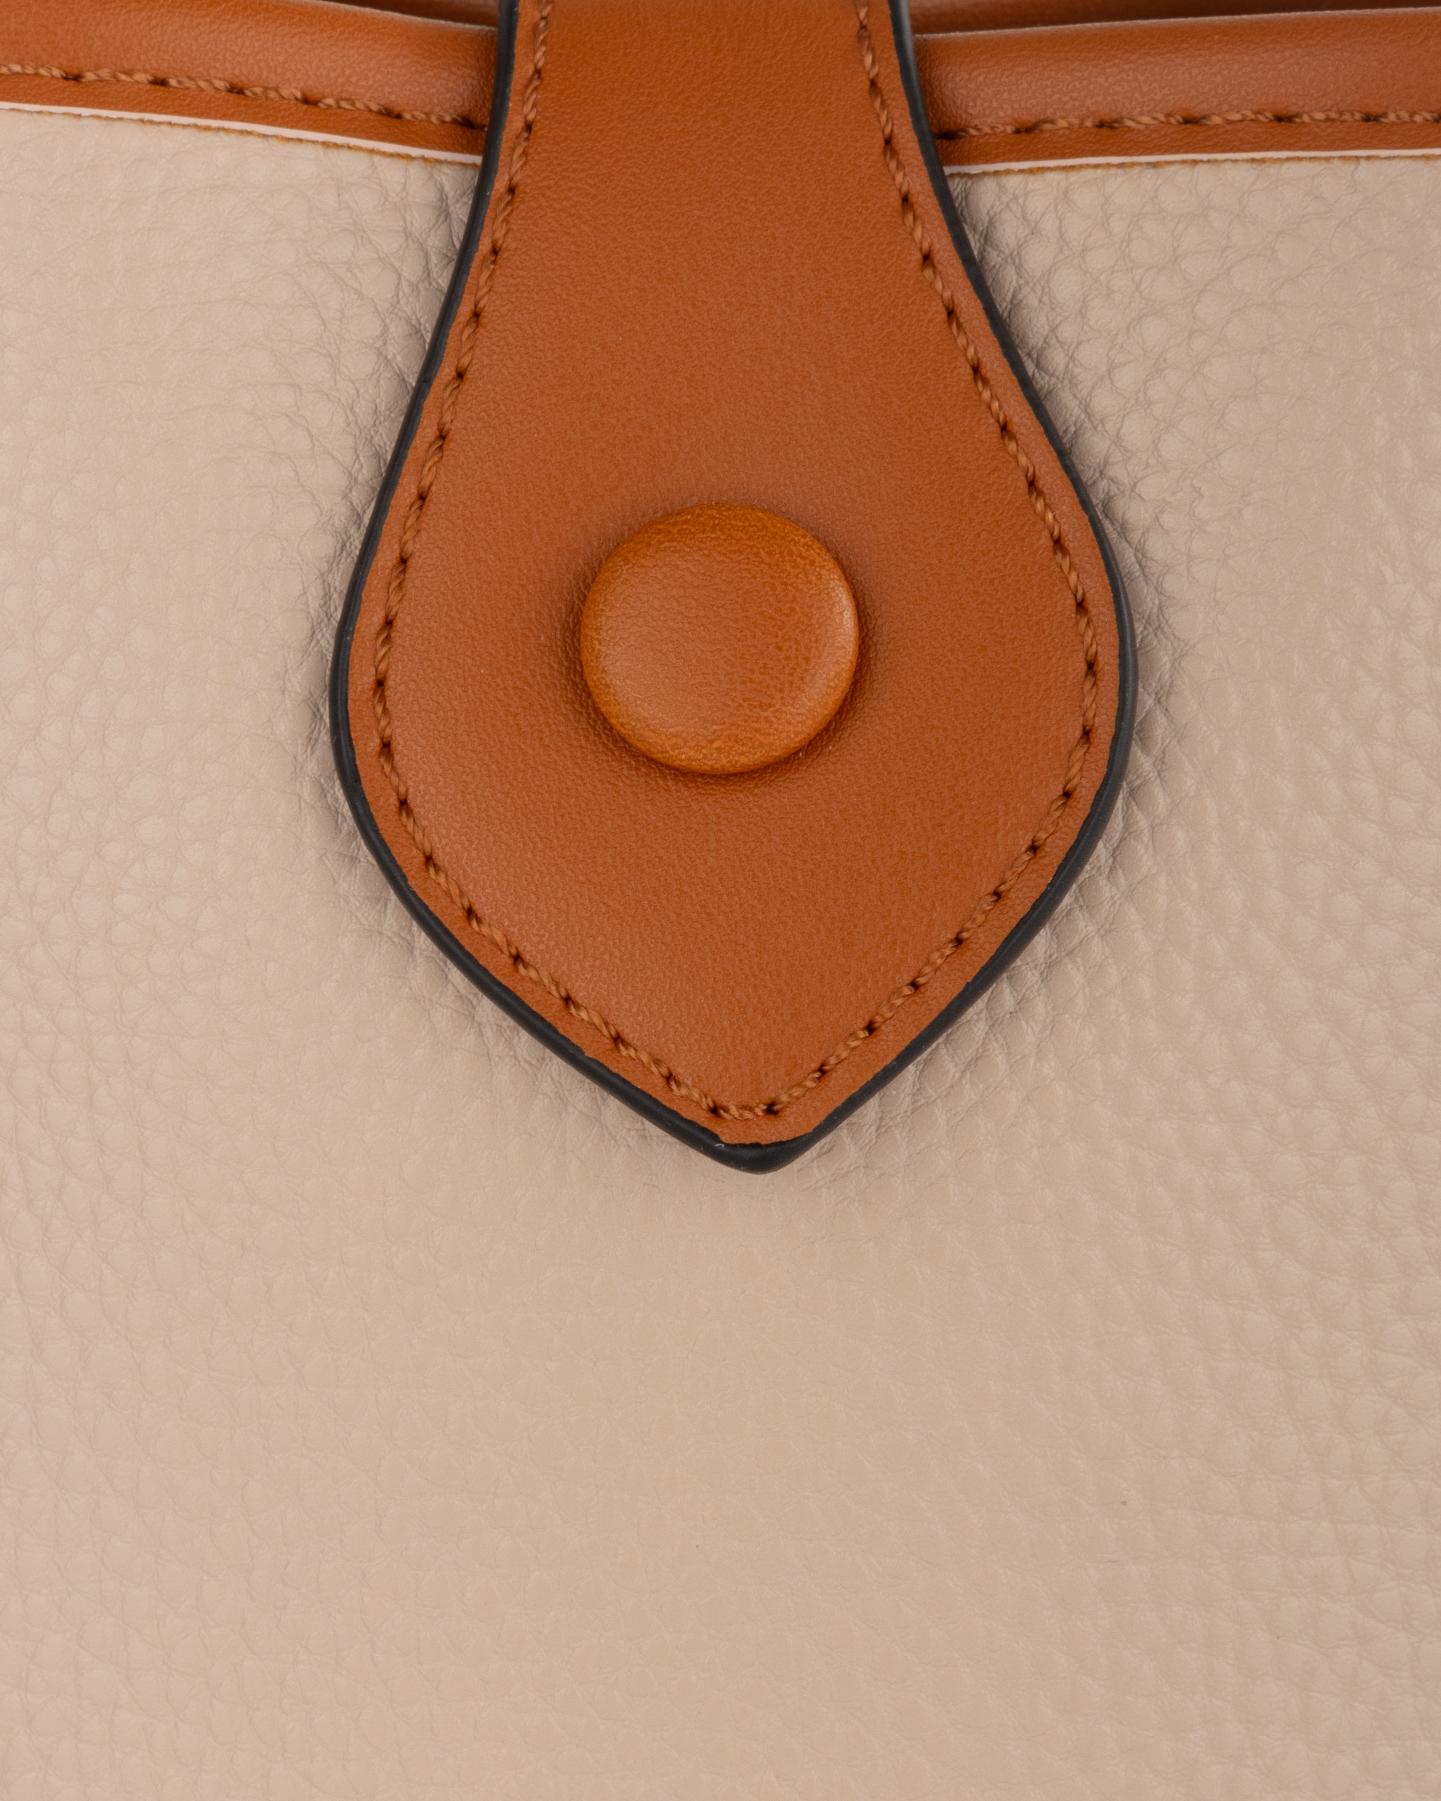 Bulchee Ladies Sling Bag (PU Leather) - 18 X 7 X 20 cm